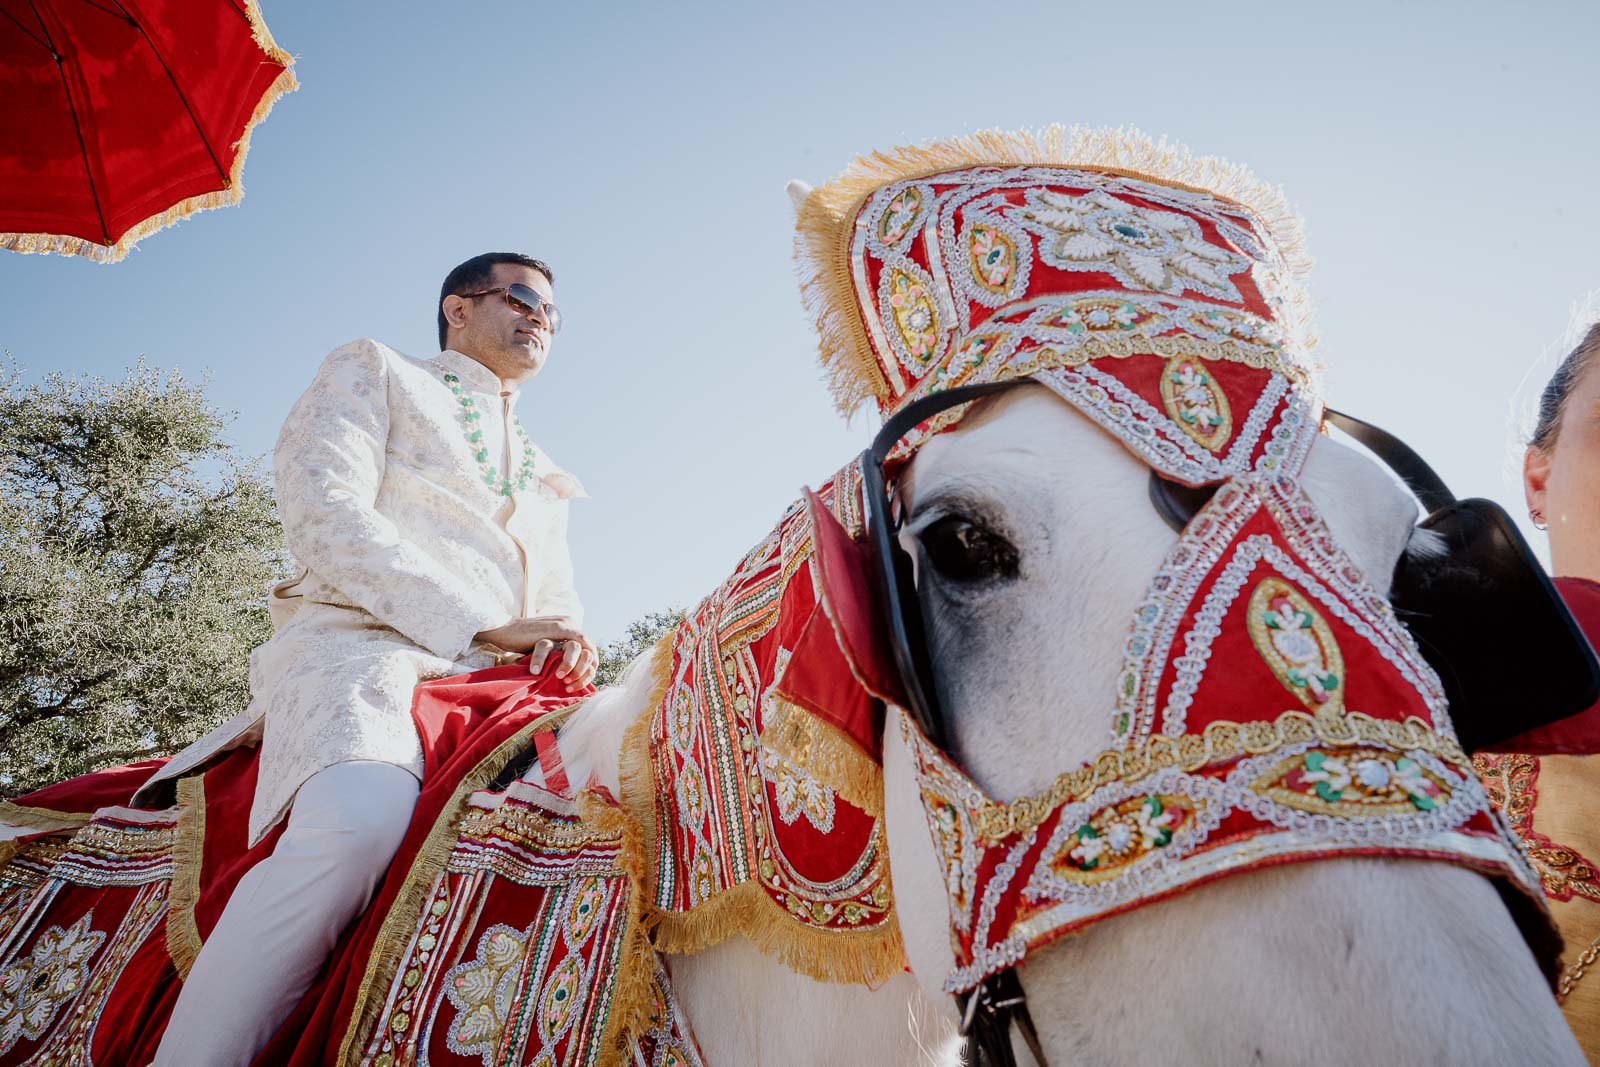 18 South Asian Indian Wedding Camp Lucy Texas Leica Wedding Photographer Philip Thomas